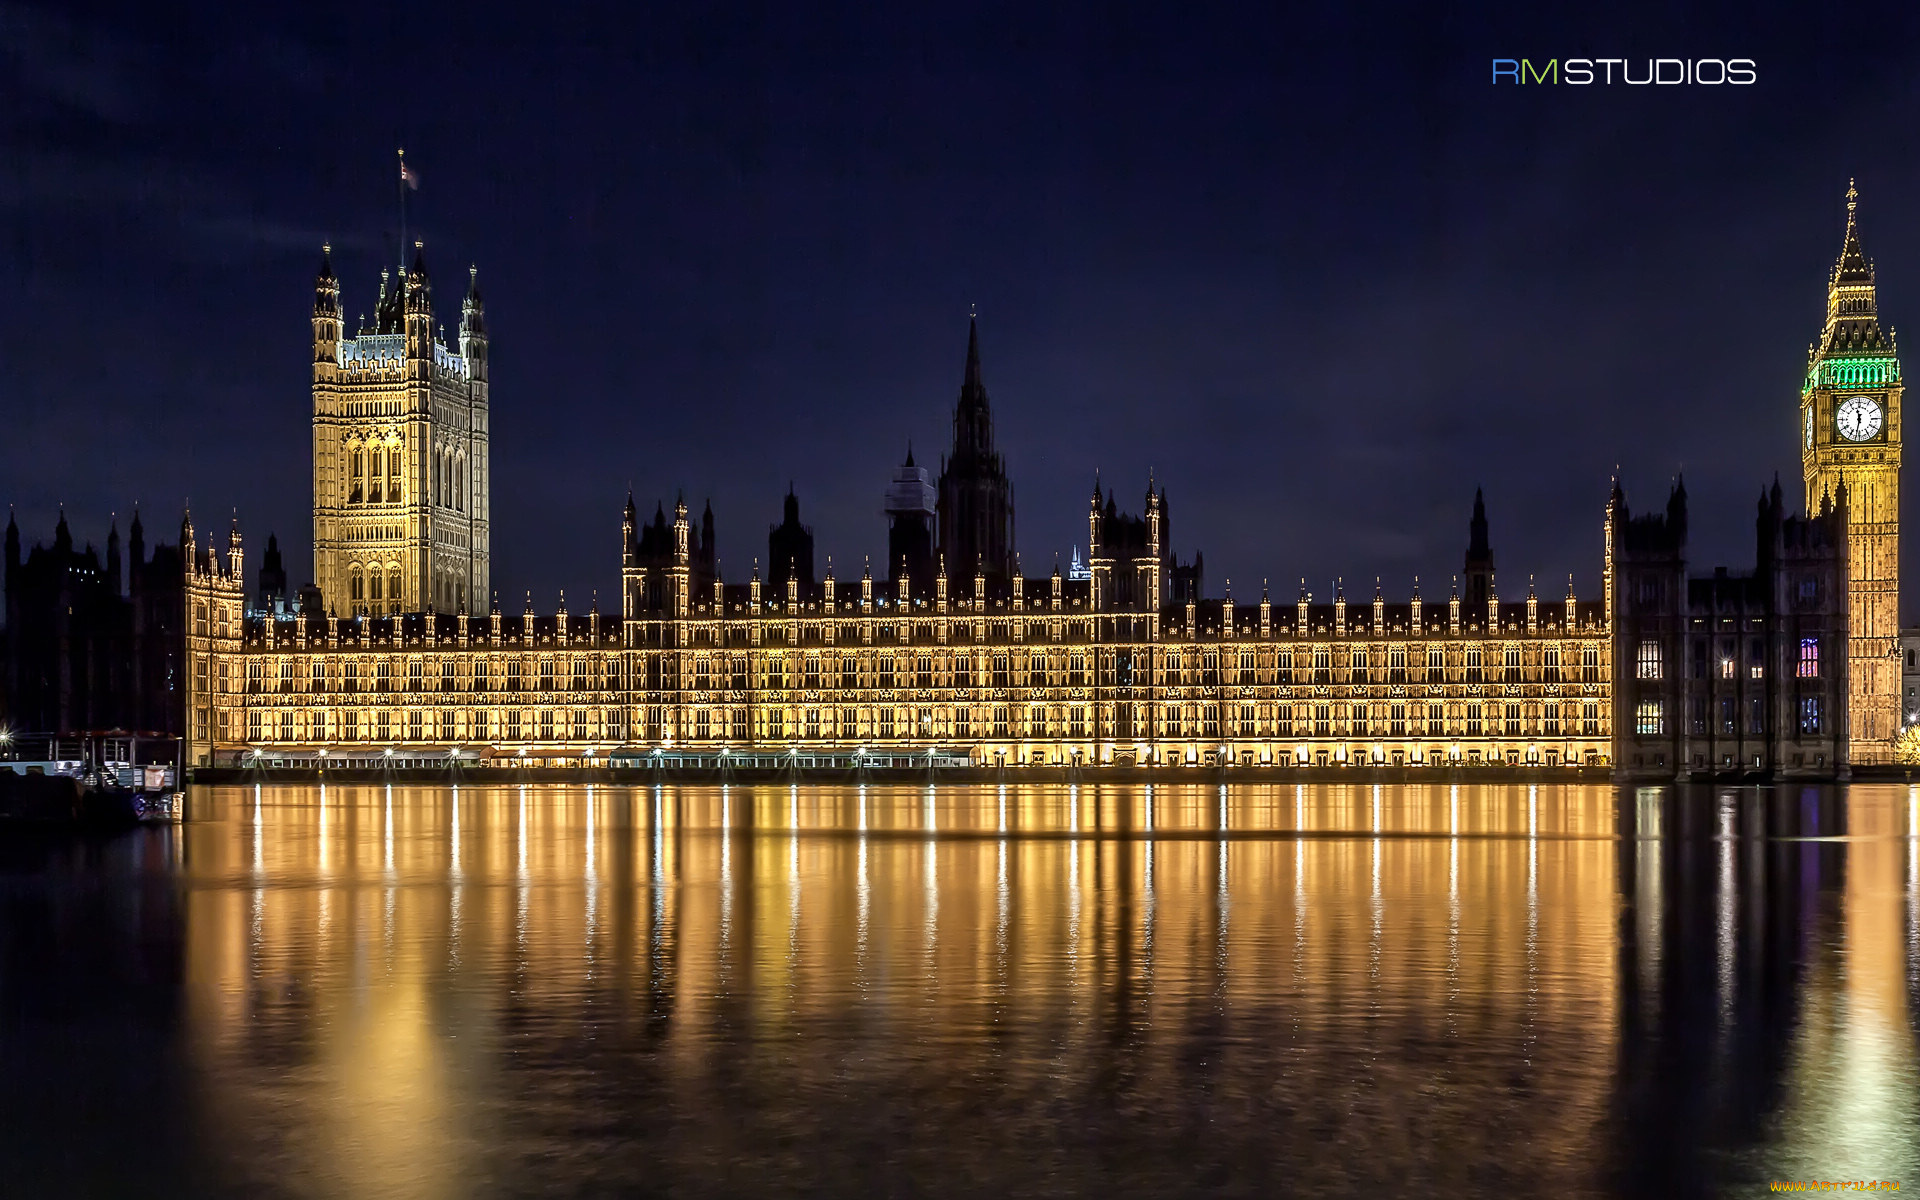 Парламент Великобритании. Вестминстерский дворец, Лондон